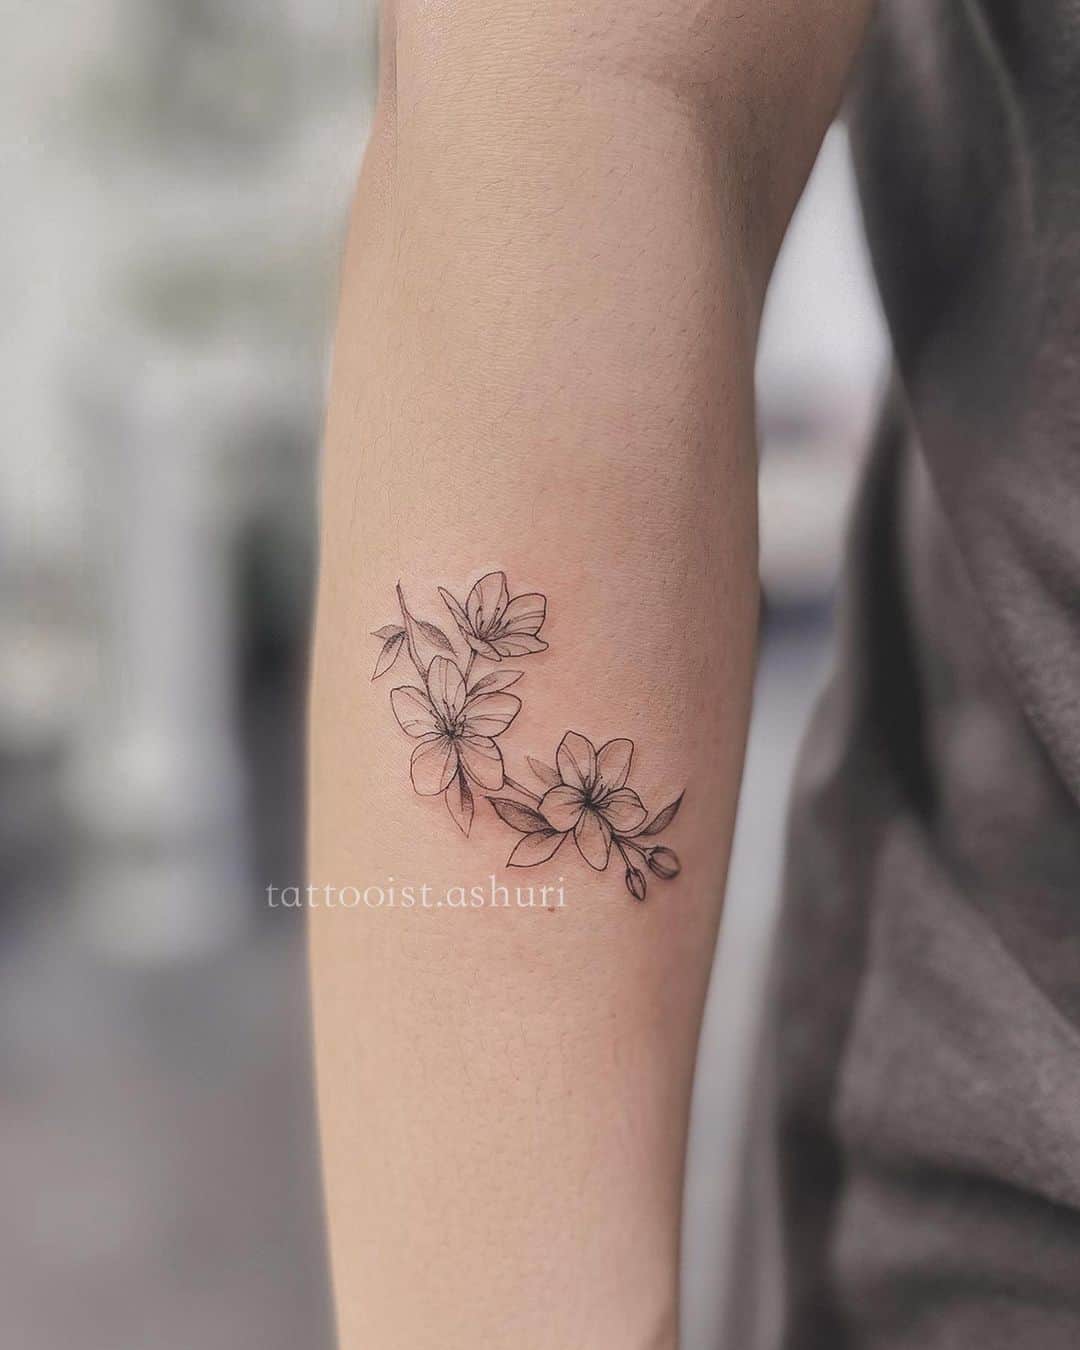 Fineline flower tattoo by tattooist.ashuri